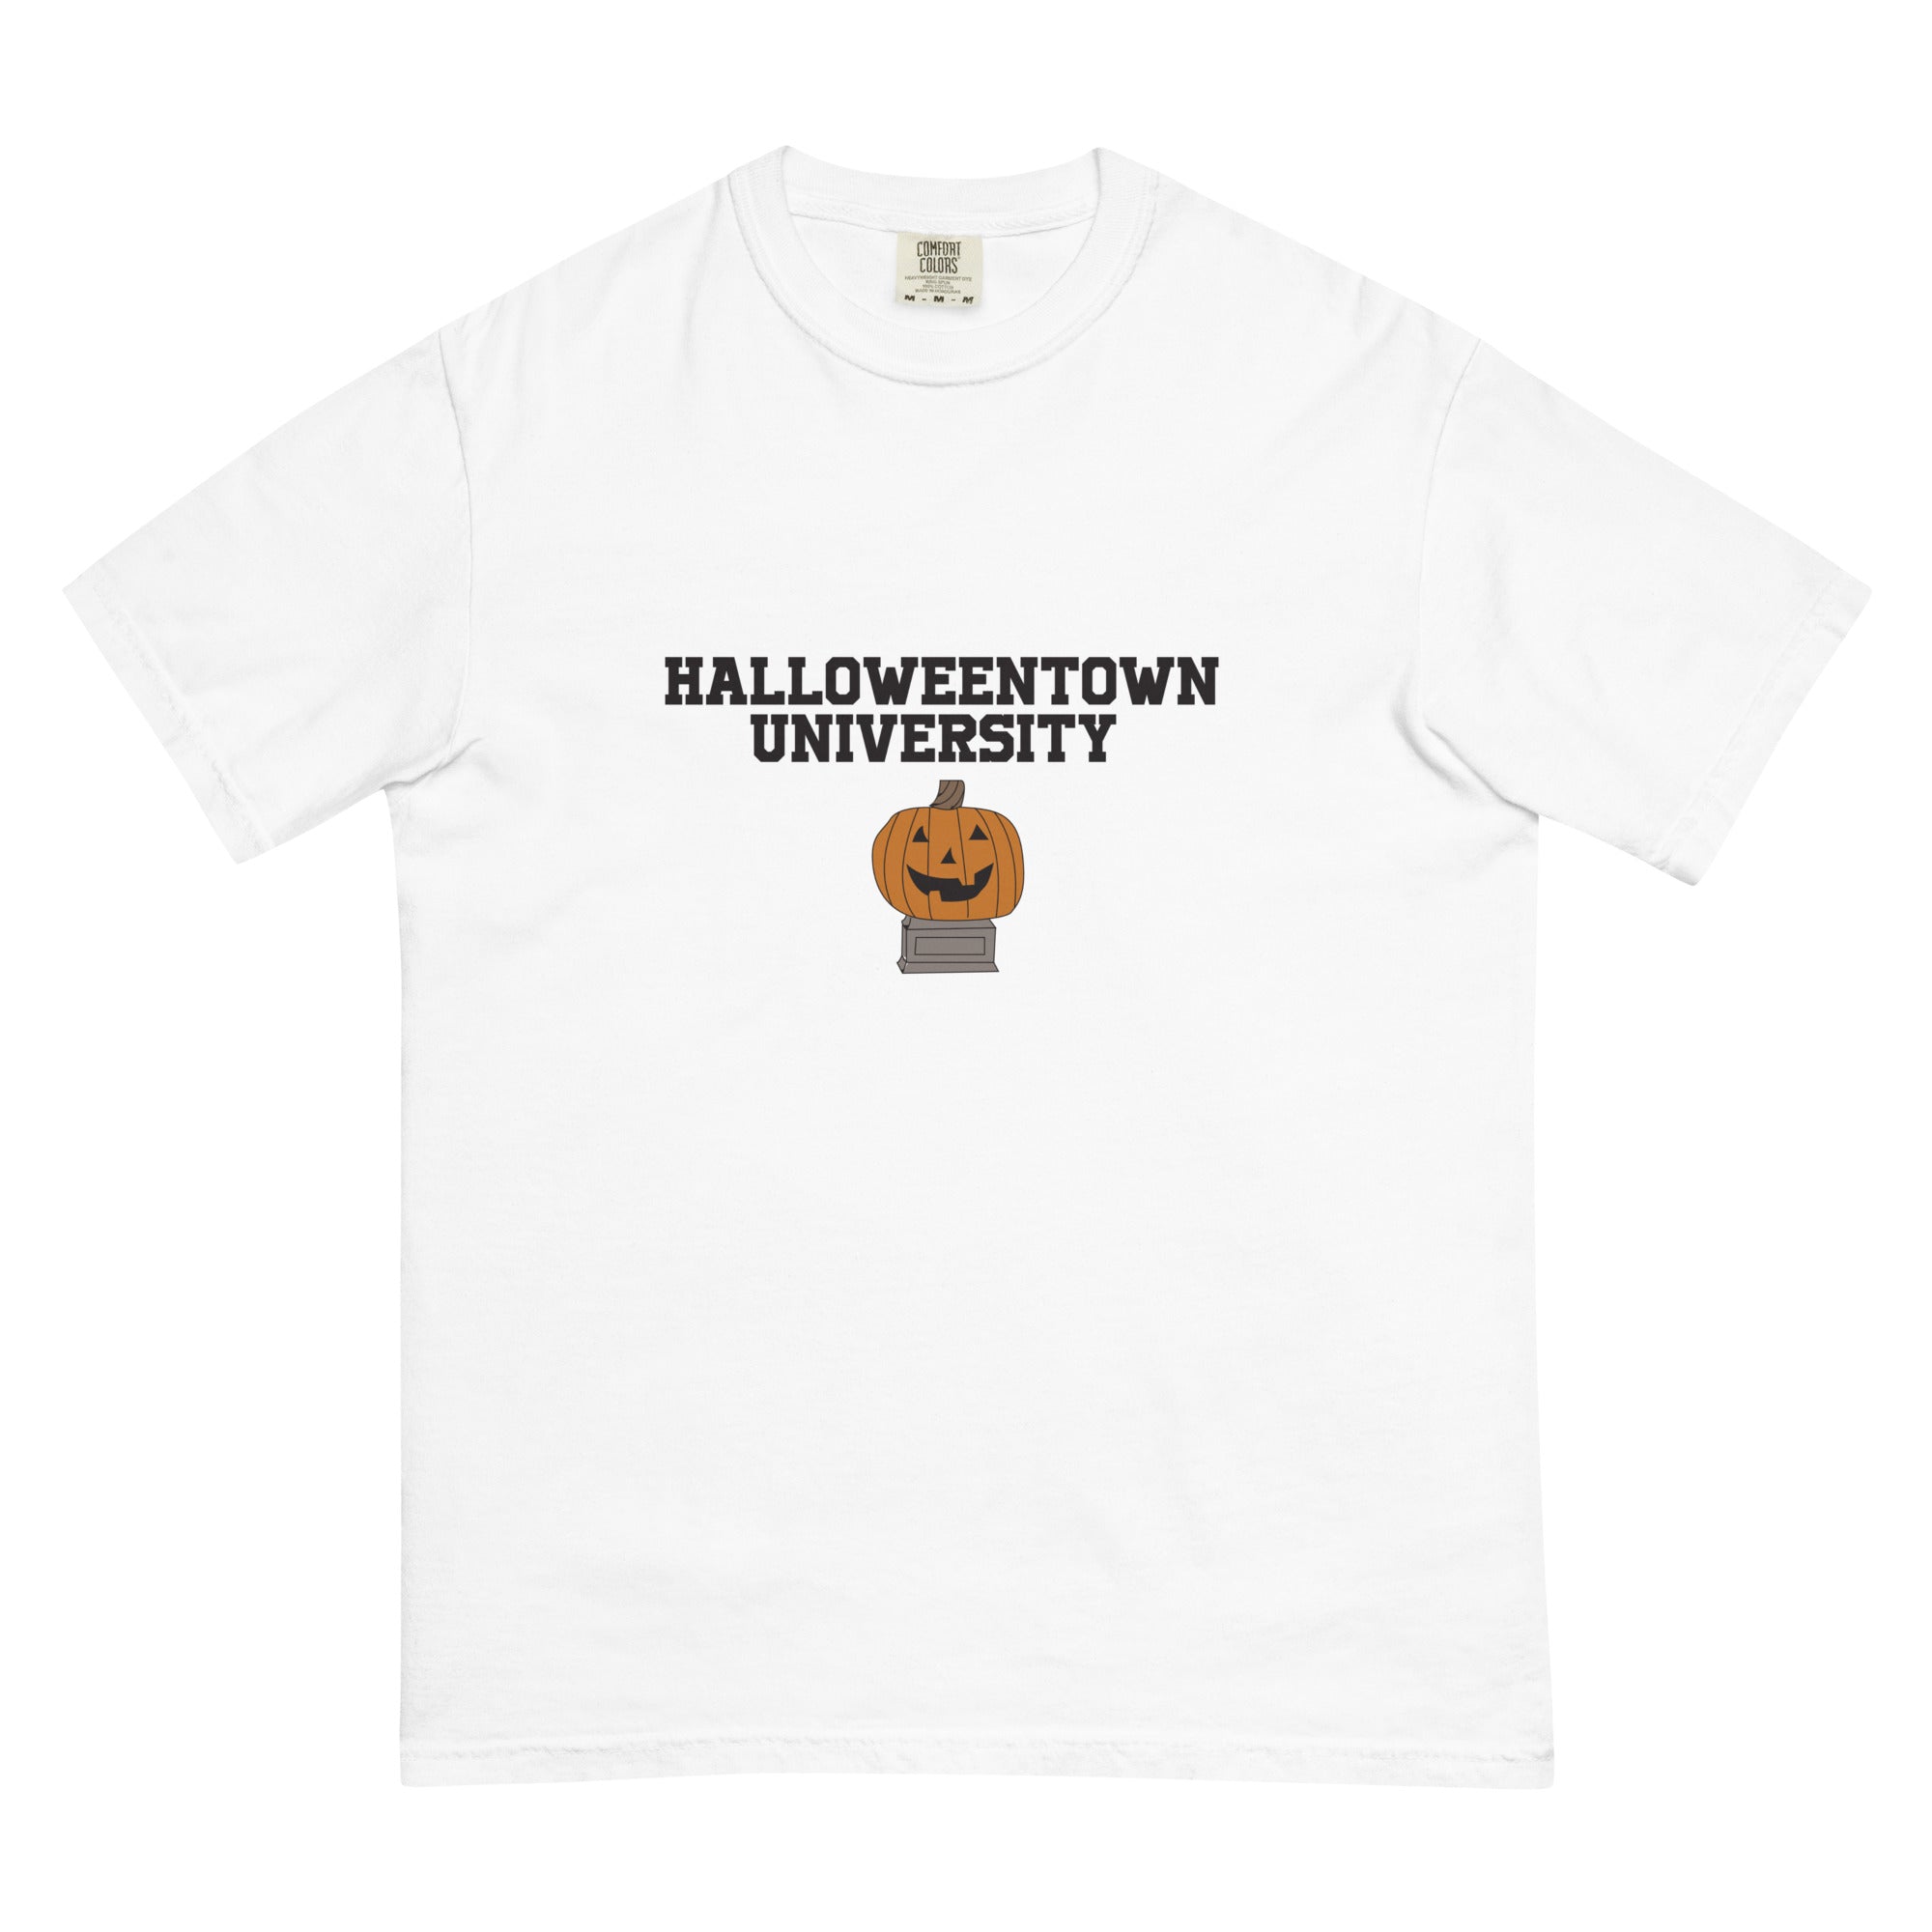 Halloweentown University garment-dyed heavyweight t-shirt (comfort colors)